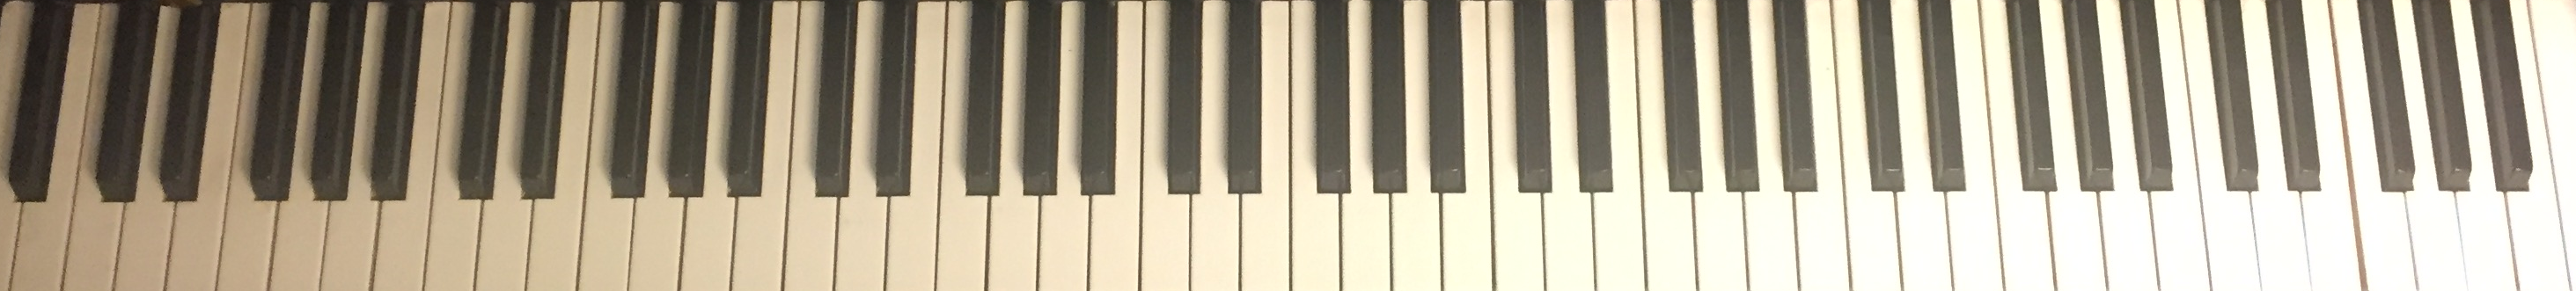 full 88-key piano horizontal bar